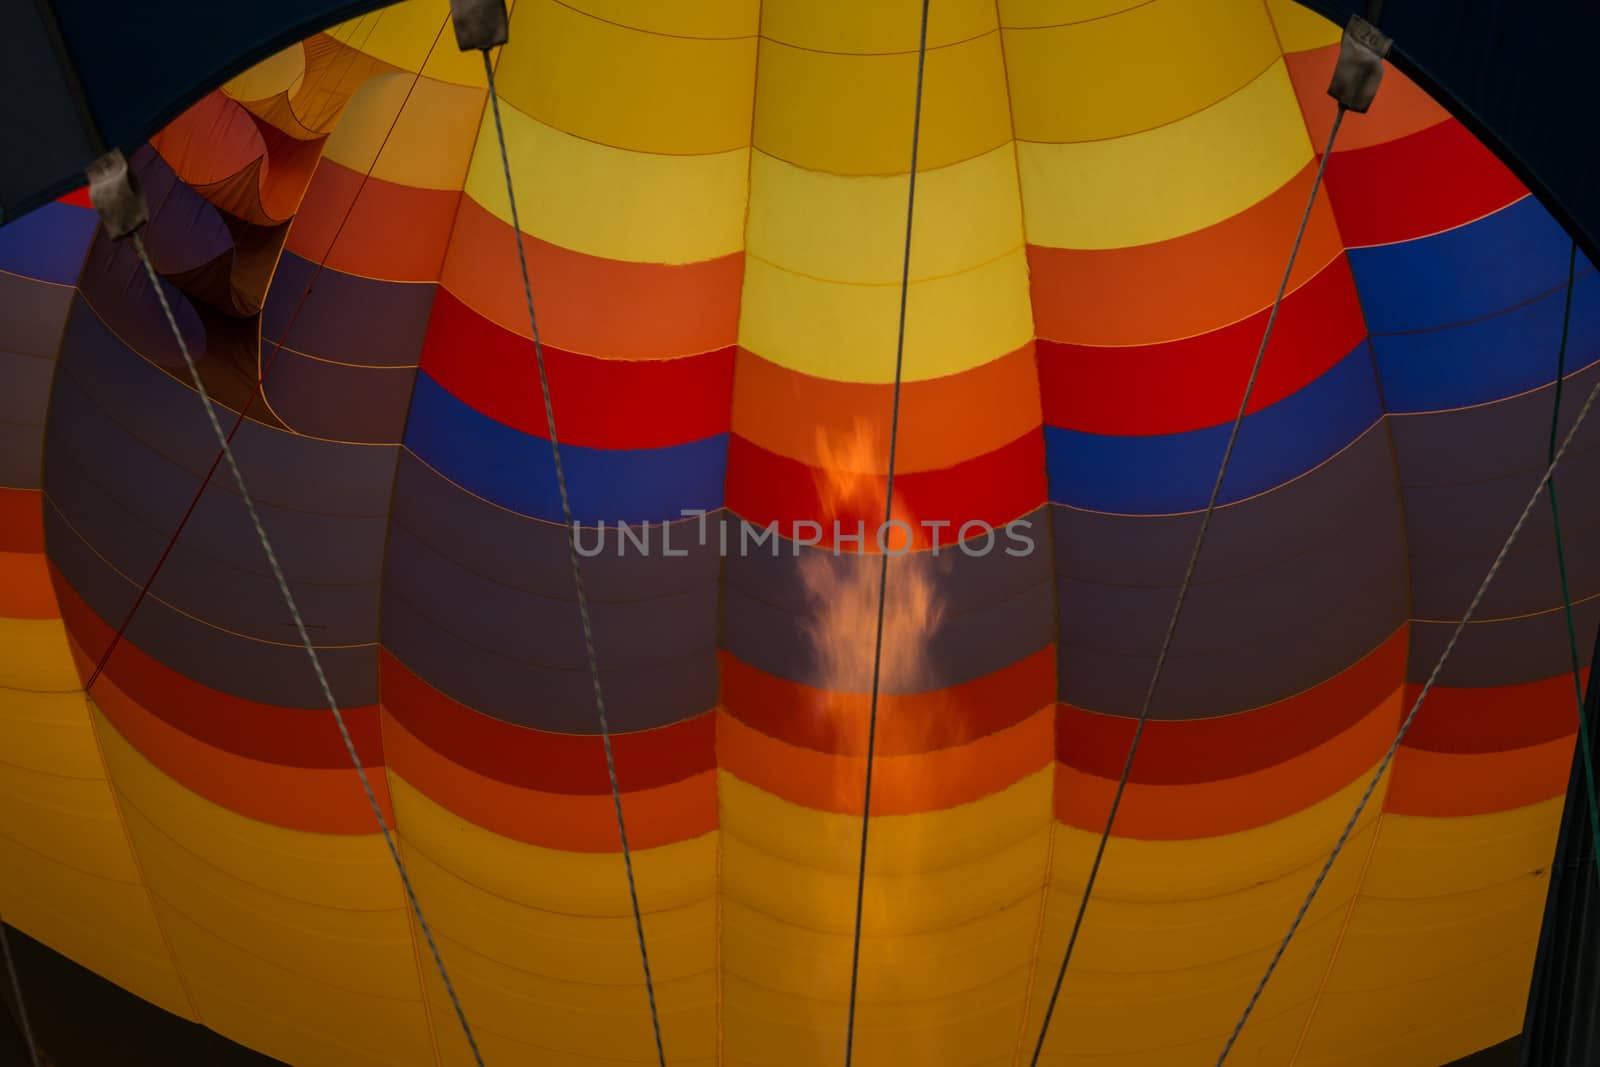 Propane fuelled flames inside hot air balloon